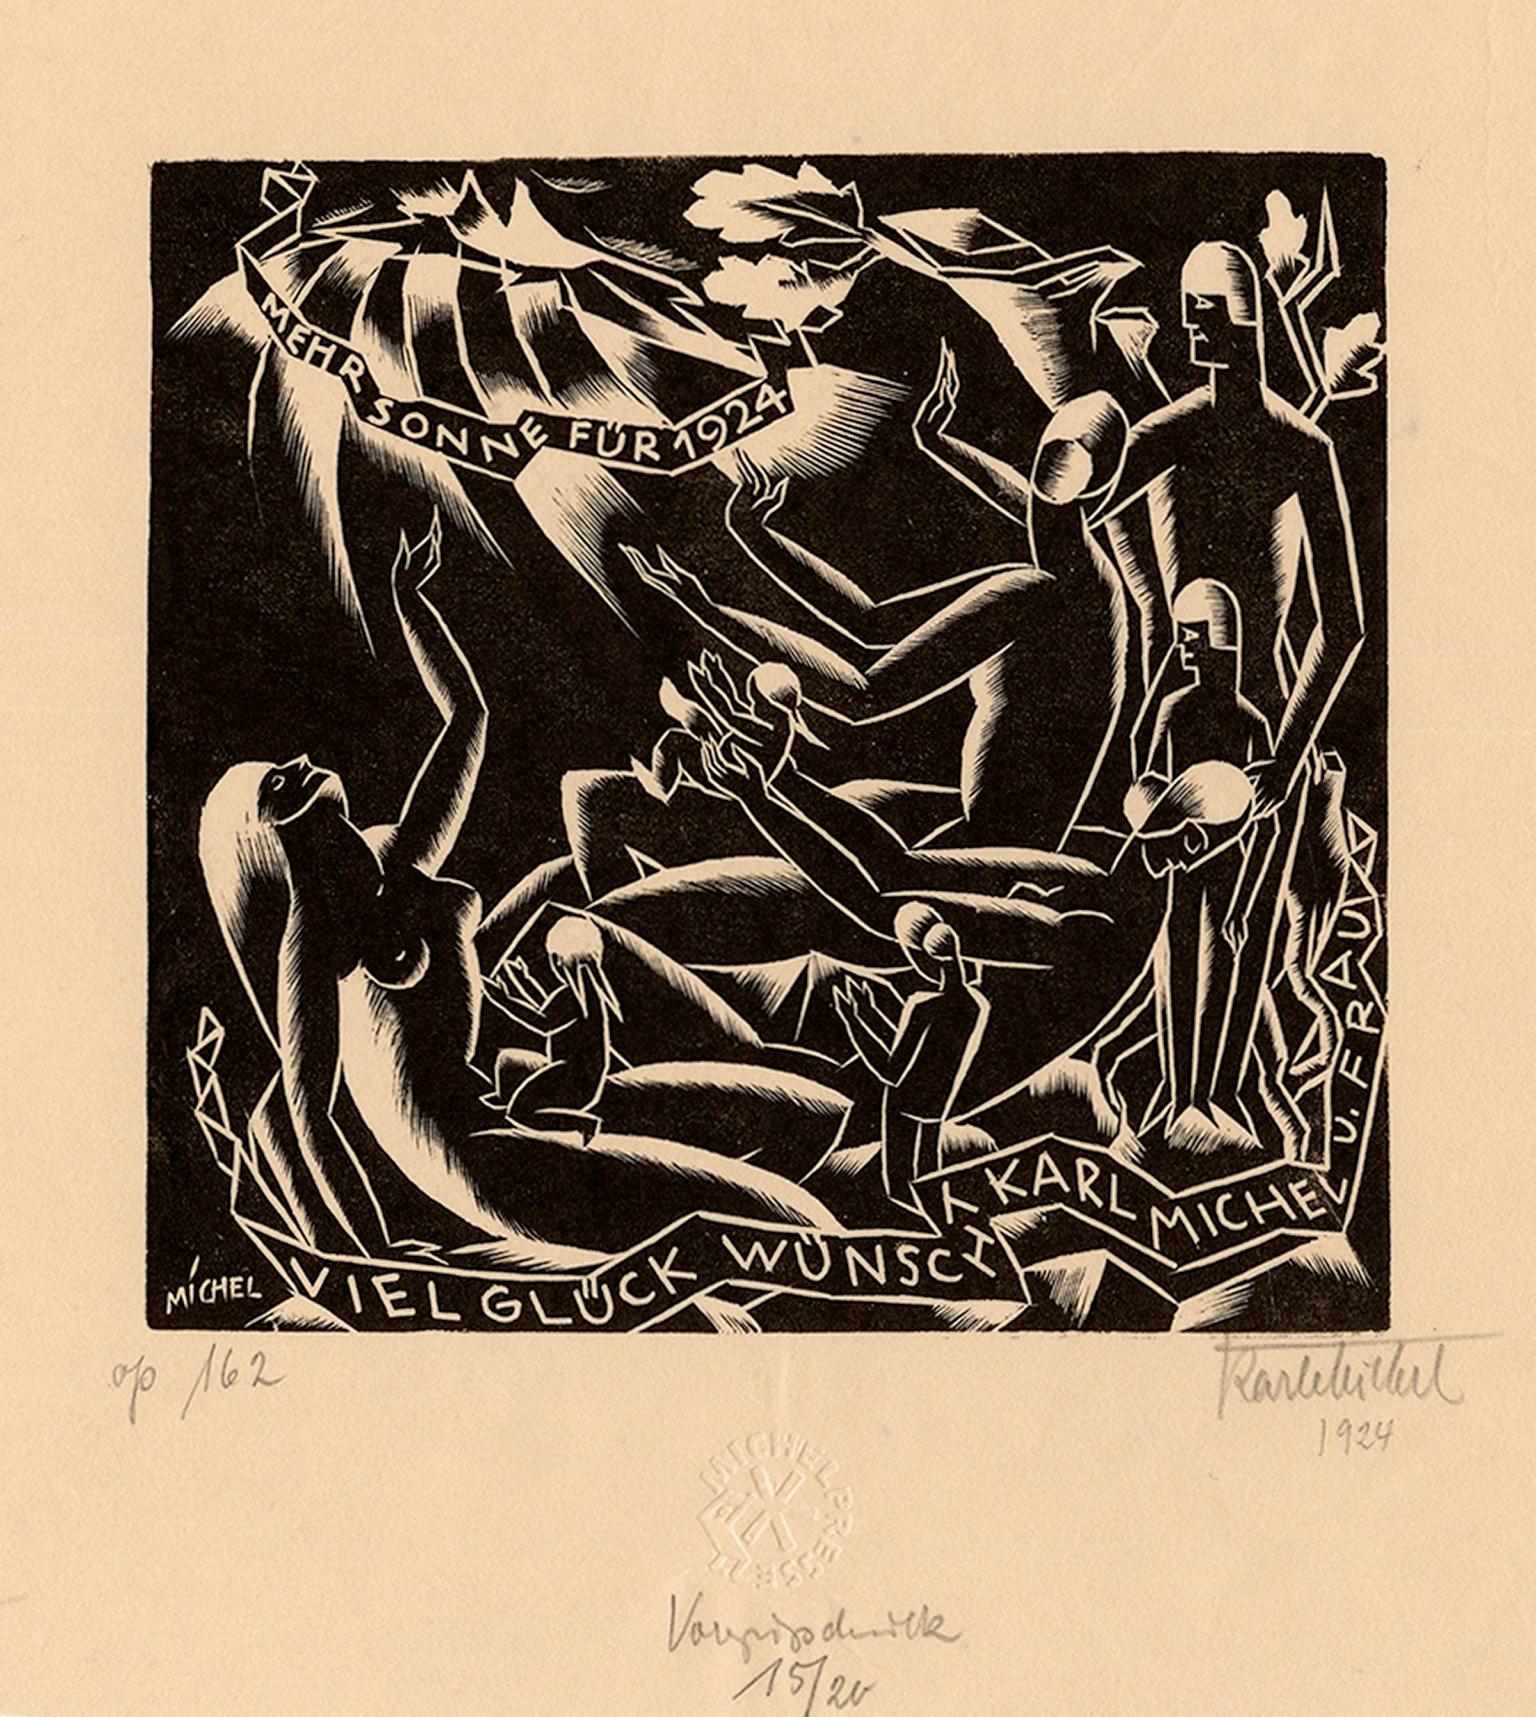 Karl Michel Figurative Print - 'Mehr Sonne fur 1924' (More Sun for 1924)— 1920s German Expressionism